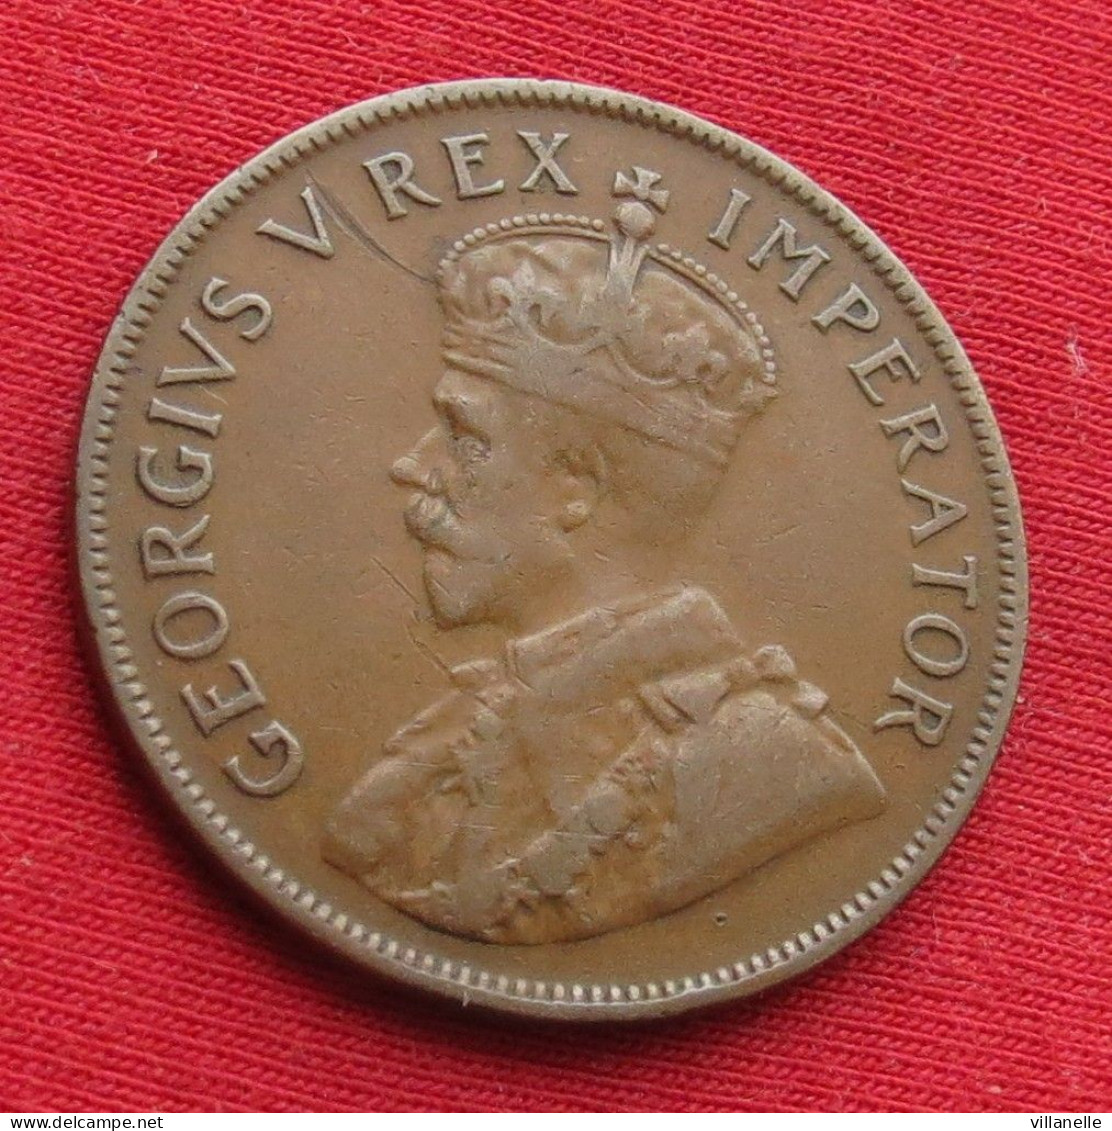 South Africa 1 Penny 1936  Africa Do Sul RSA Afrique Do Sud Afrika  W ºº - Südafrika